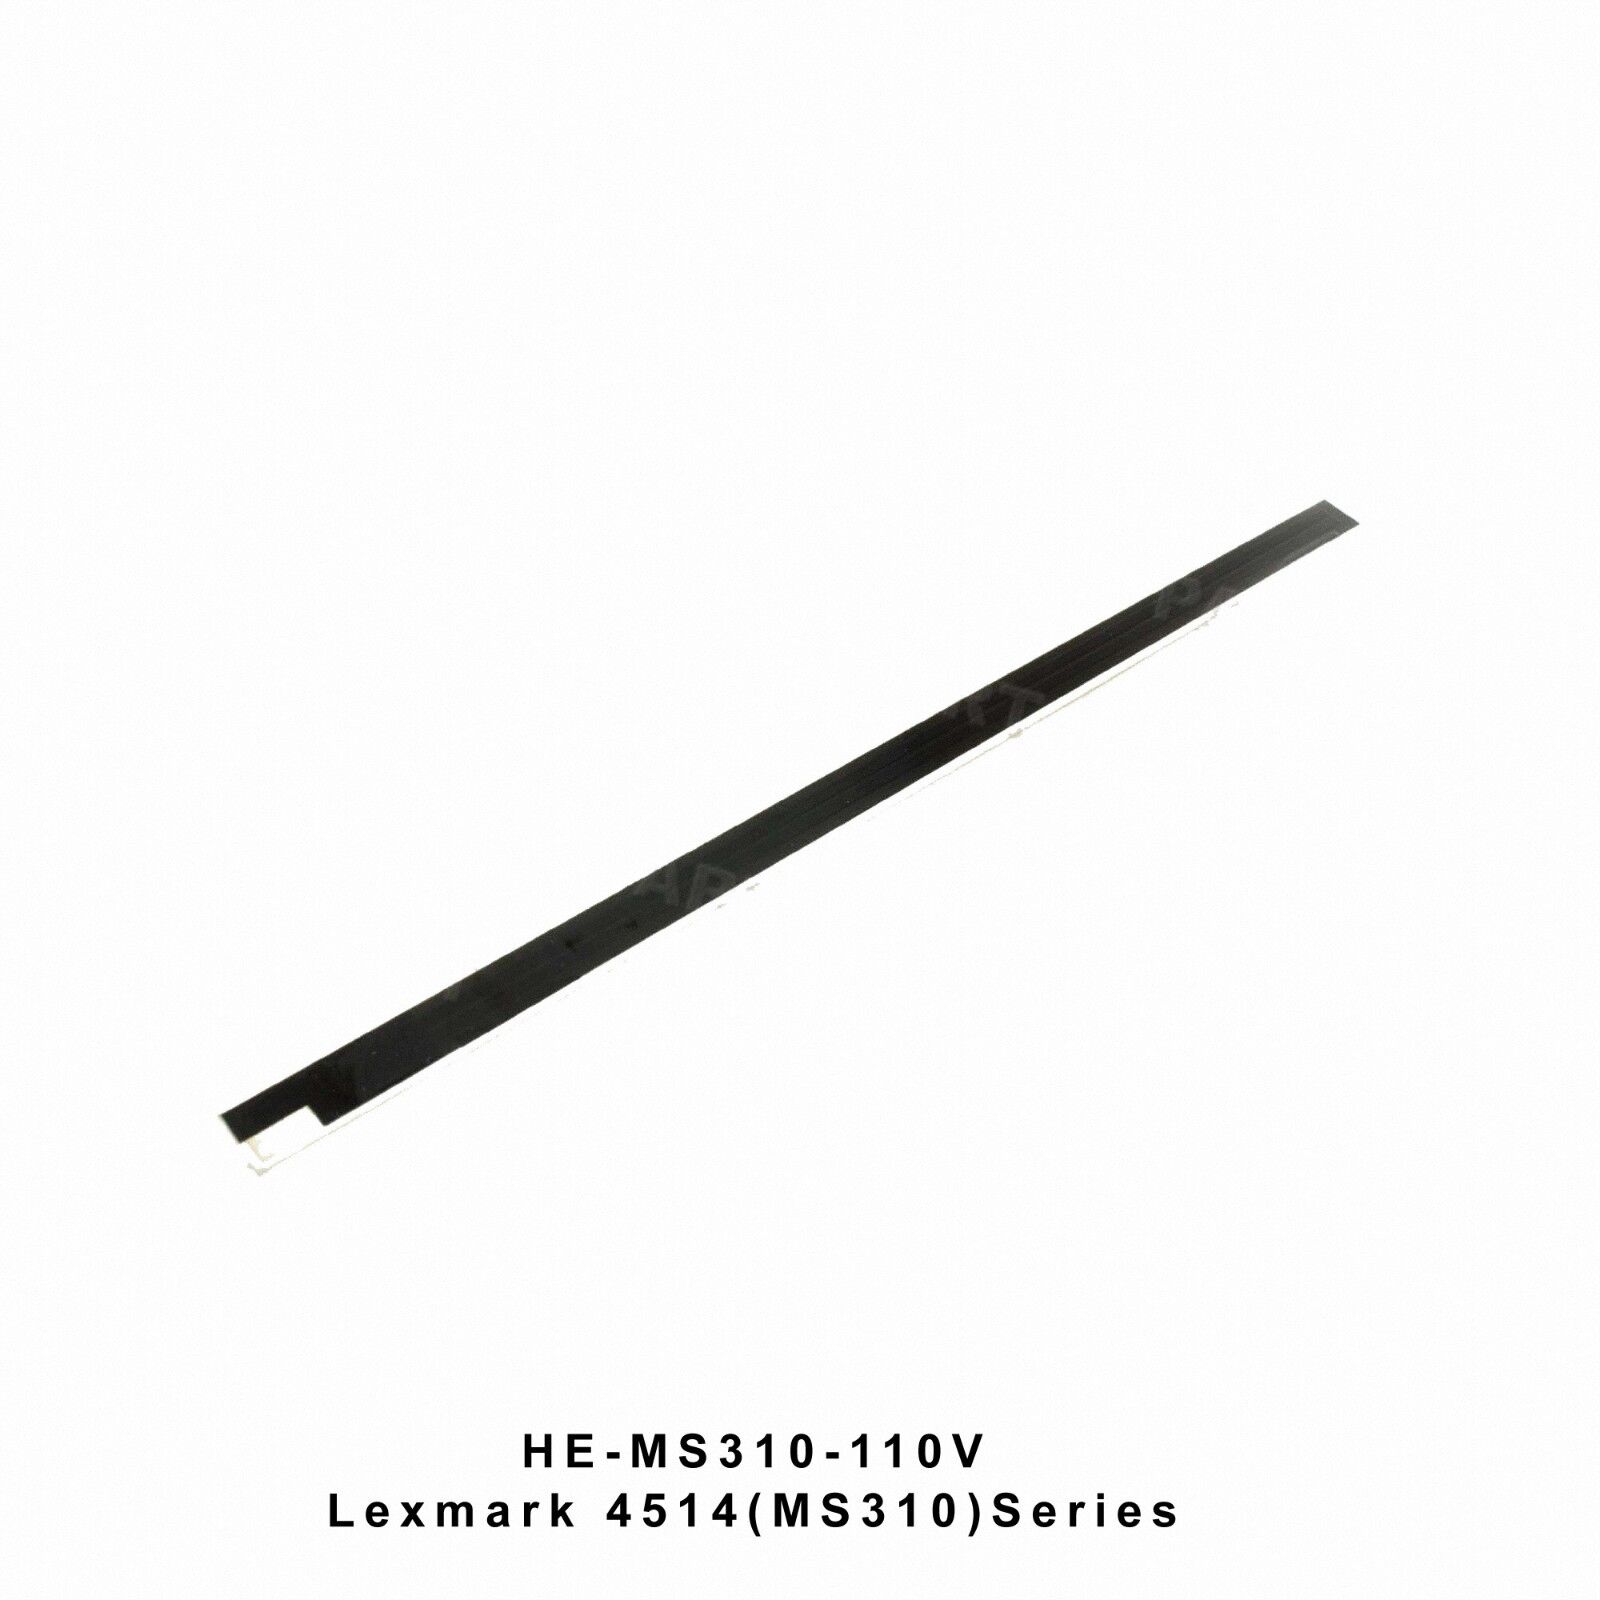 Lexmark 4514 M1140 MS310 Fuser Heating Element (110V) HE-MS310-110V OEM Quality